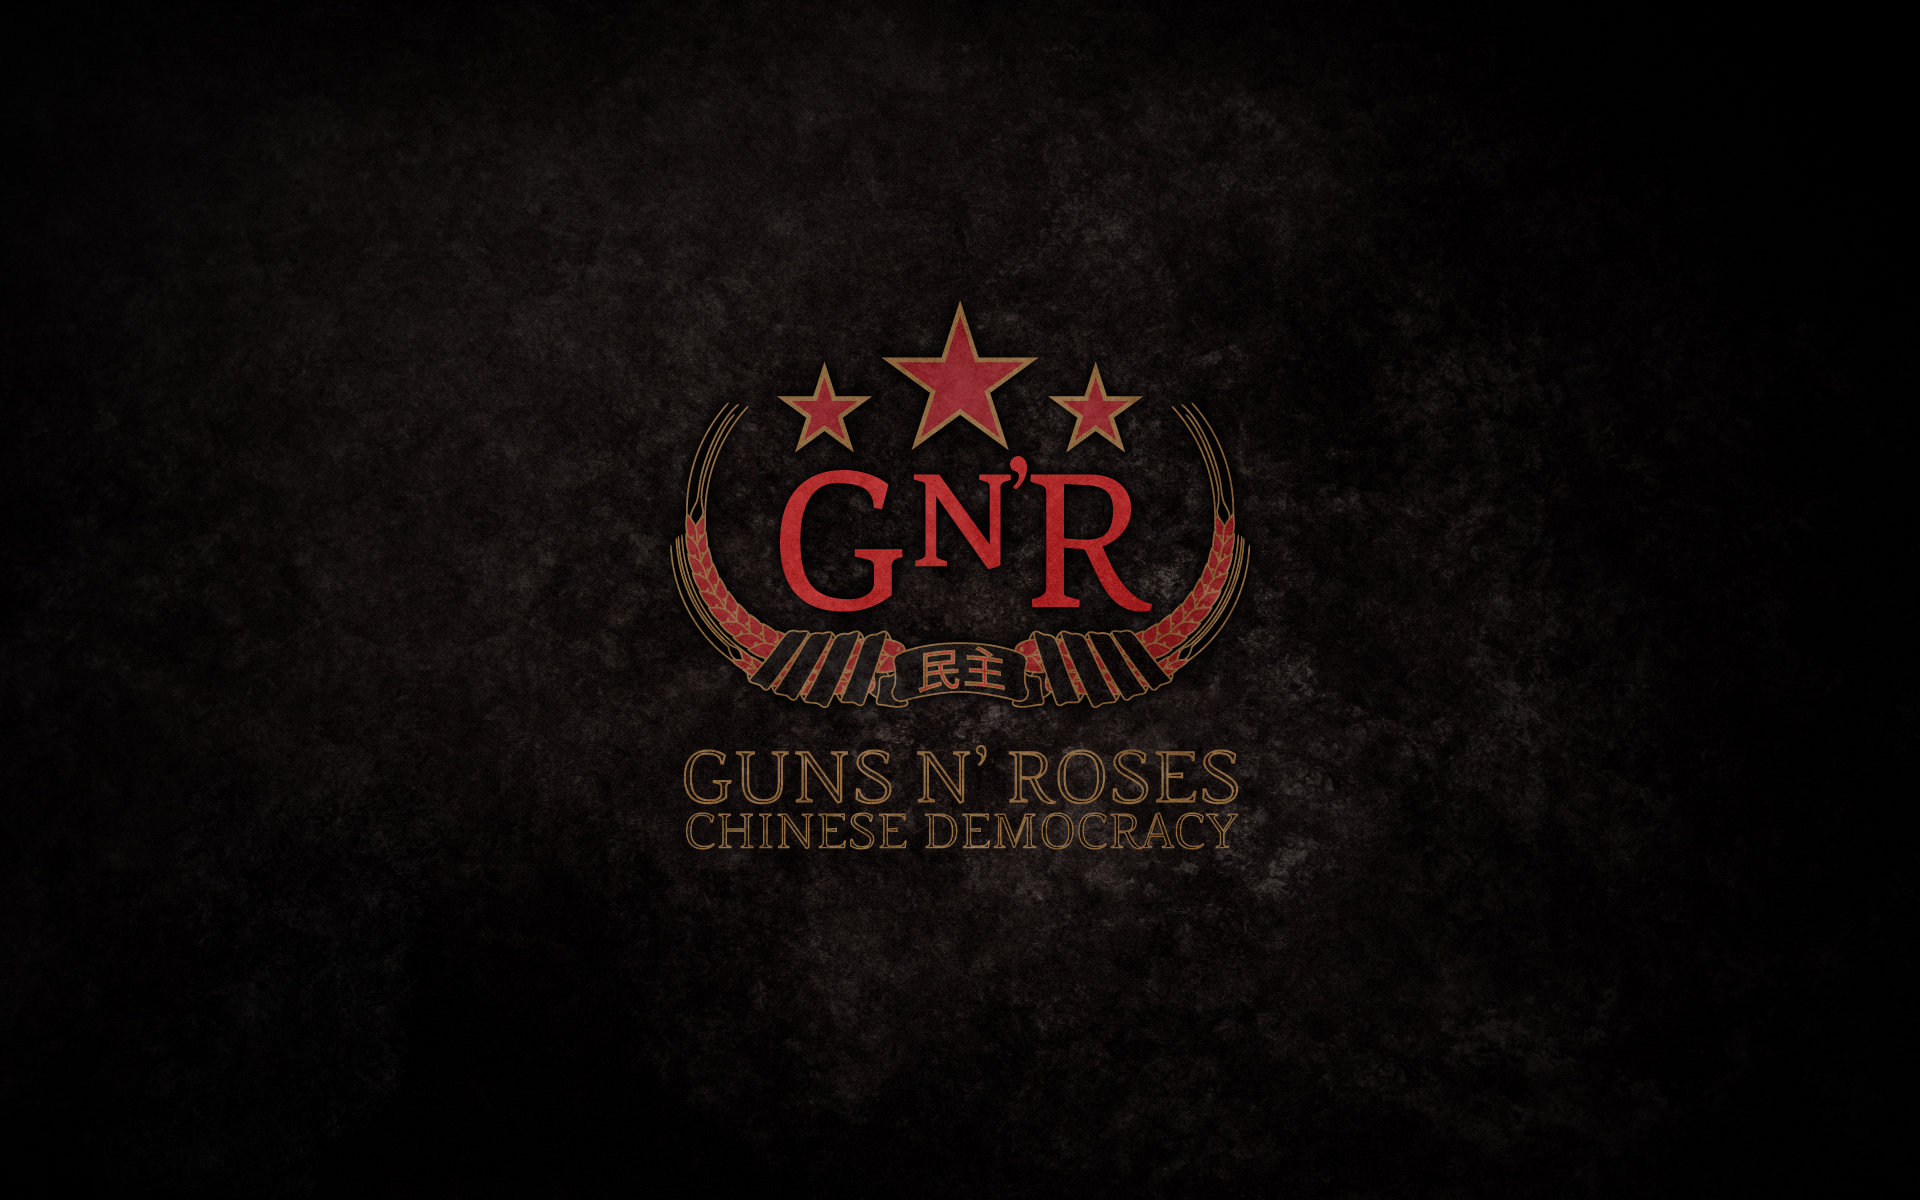 Free Guns N' Roses high quality wallpaper ID:256849 for hd 1920x1200 computer